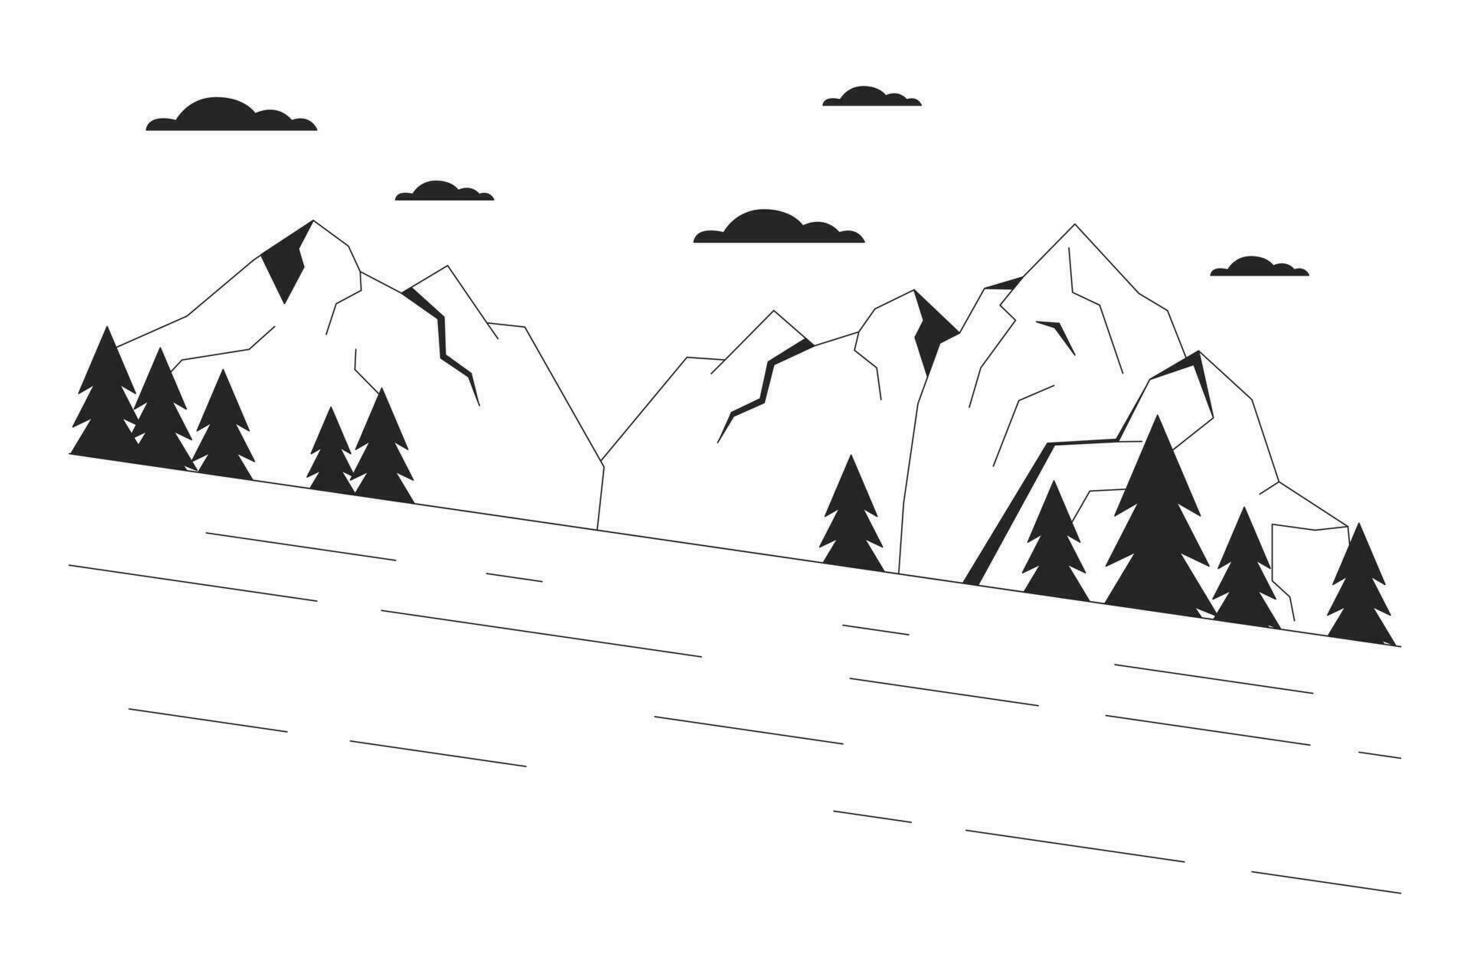 Ski slope beside mountain forest black and white cartoon flat illustration. Skiing downhill 2D lineart landscape isolated. Snow resort mountainside slalom monochrome scene vector outline image